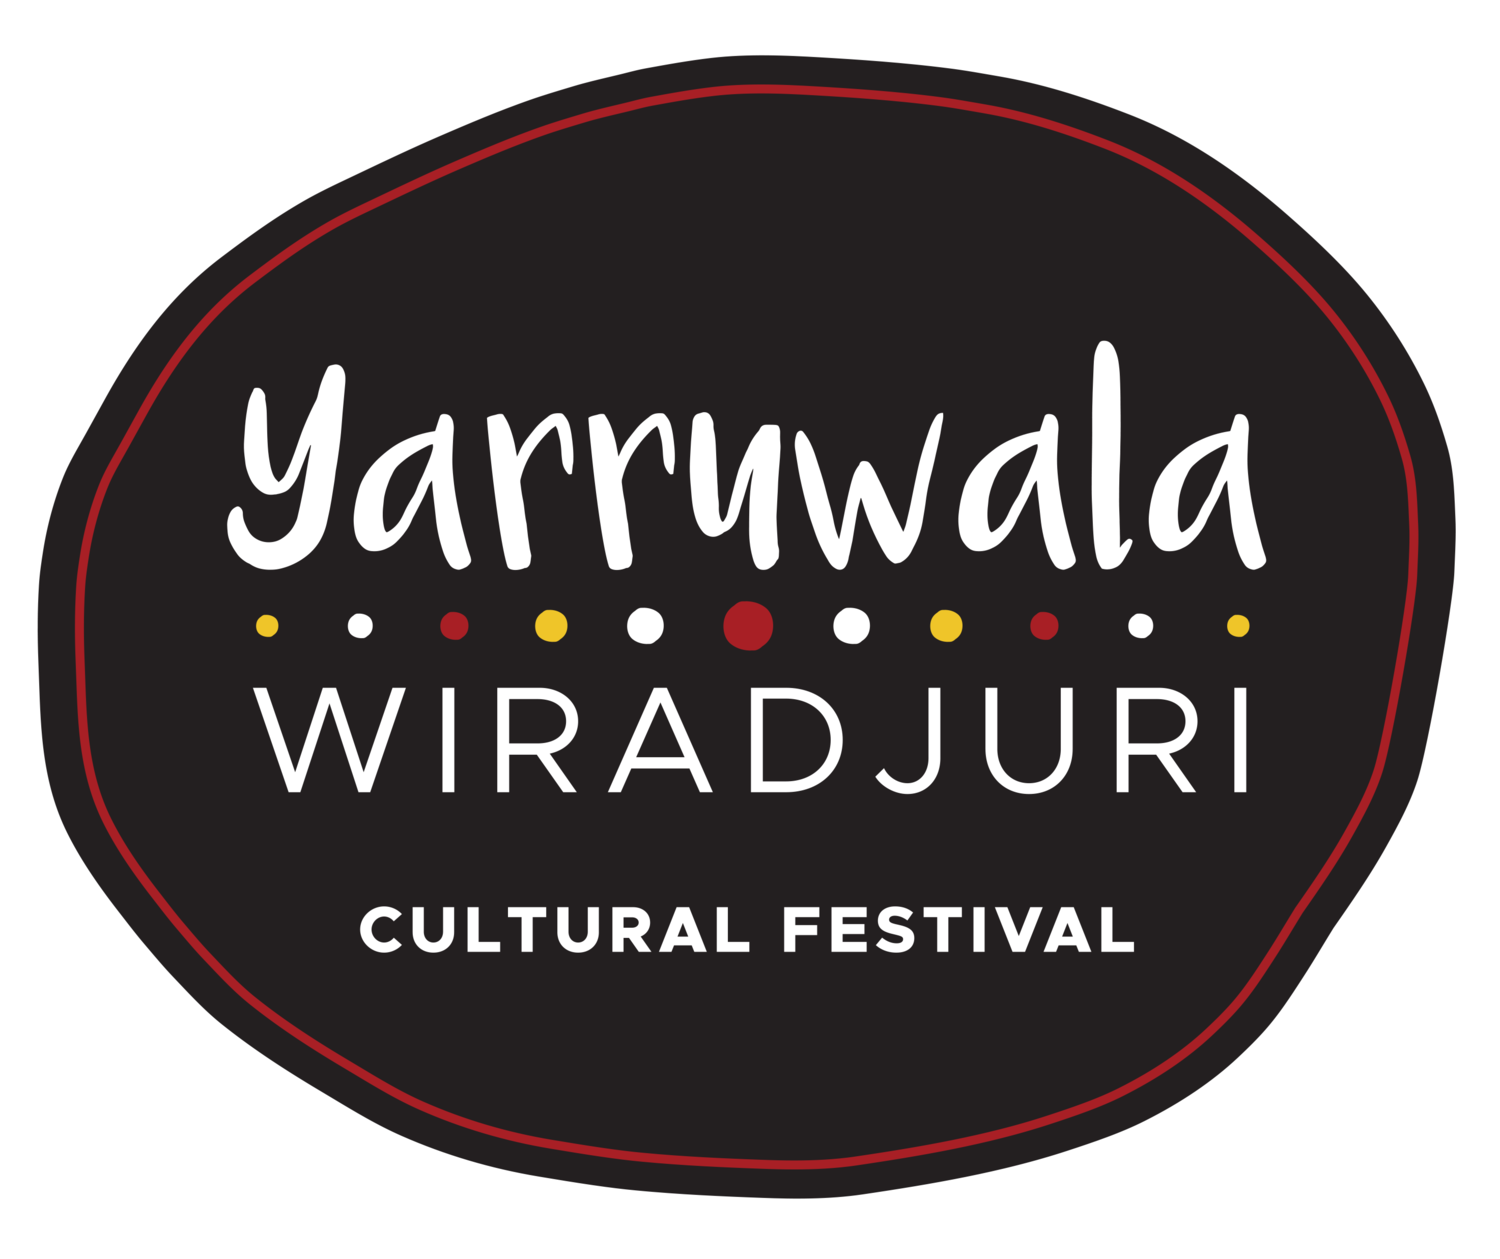 Yarruwala Wiradjuri Cultural Festival